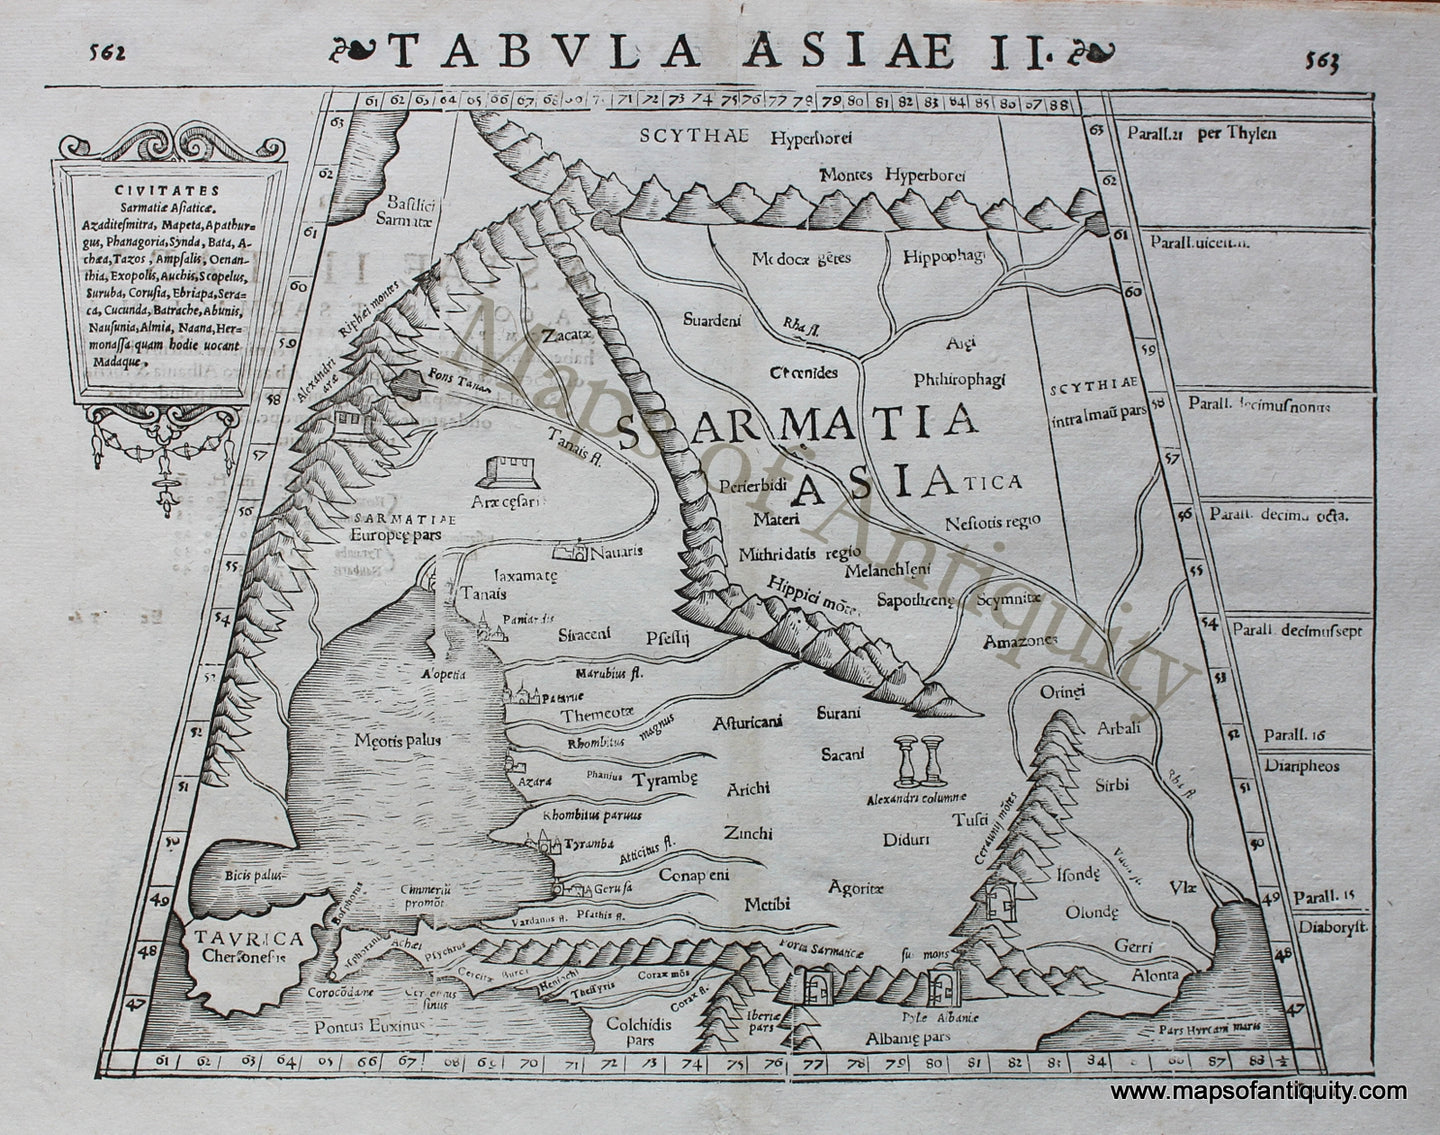 Antique-Black-and-White-Engraved-Map-Tabula-Asiae-II-Strabonis-Asia-Ukraine--1542-Munster-Maps-Of-Antiquity